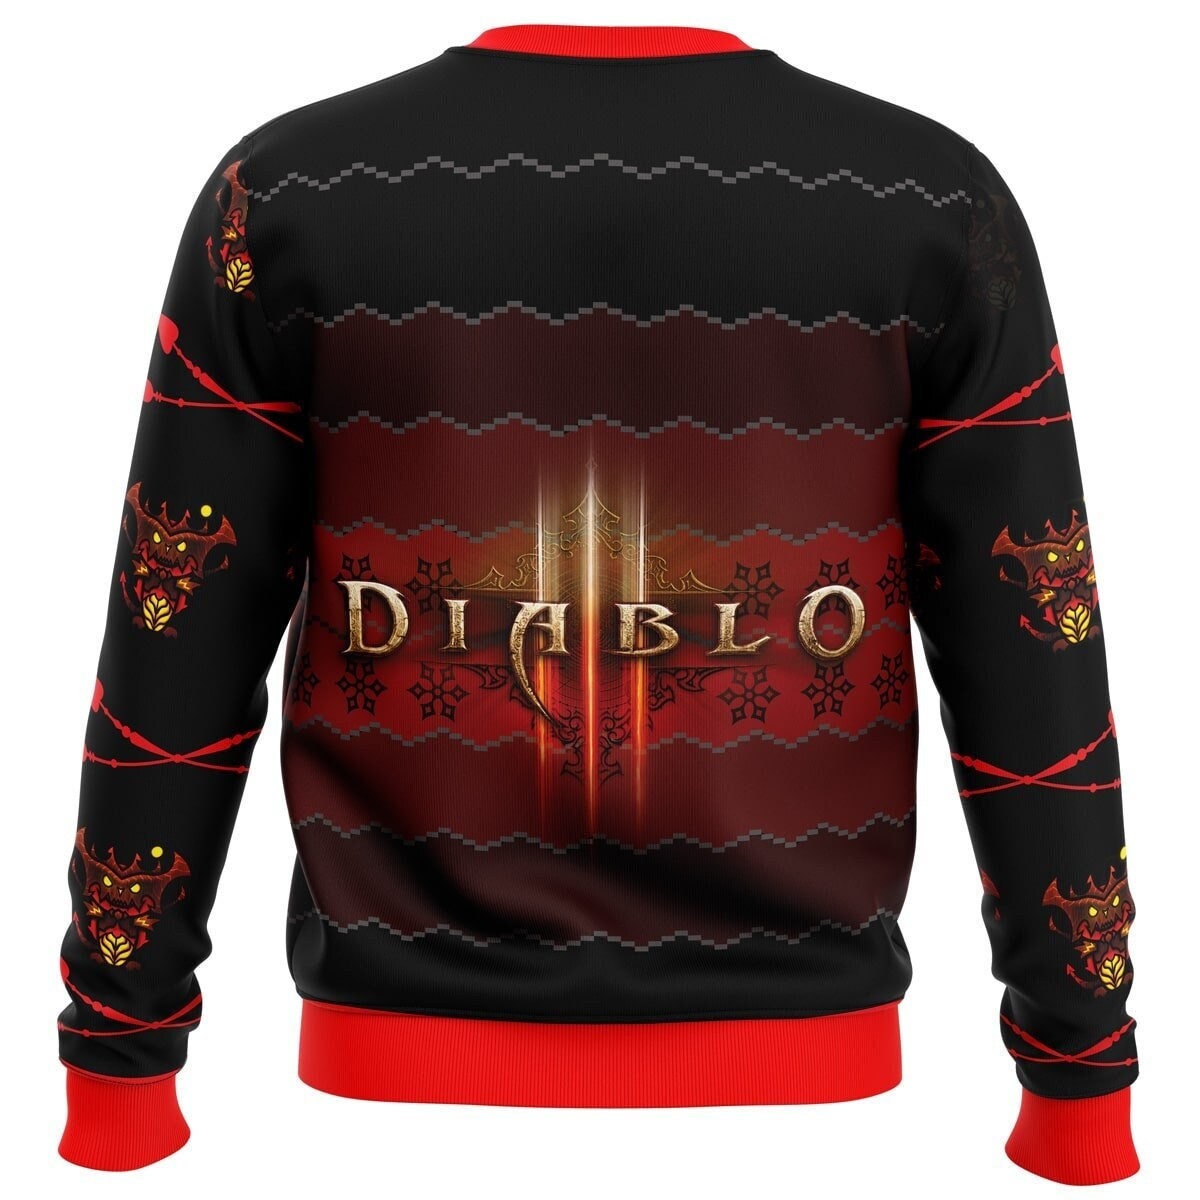 Discover Diablo 3 Christmas Ugly Sweater, Game Sweatshirt